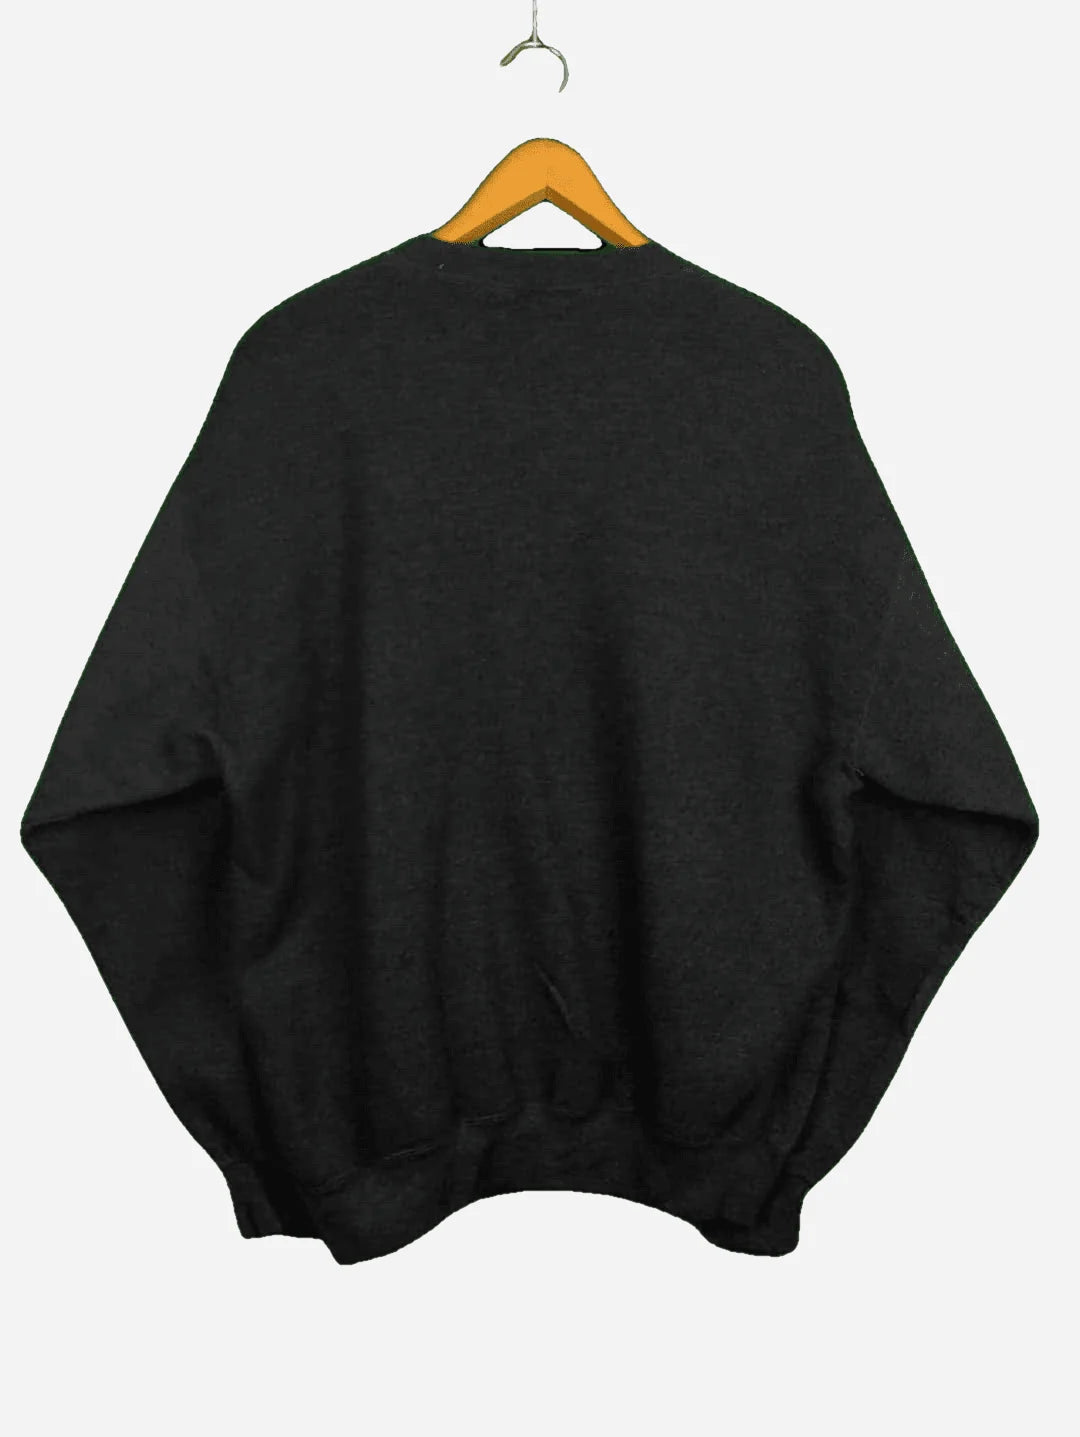 Army West Point Sweater (XL)